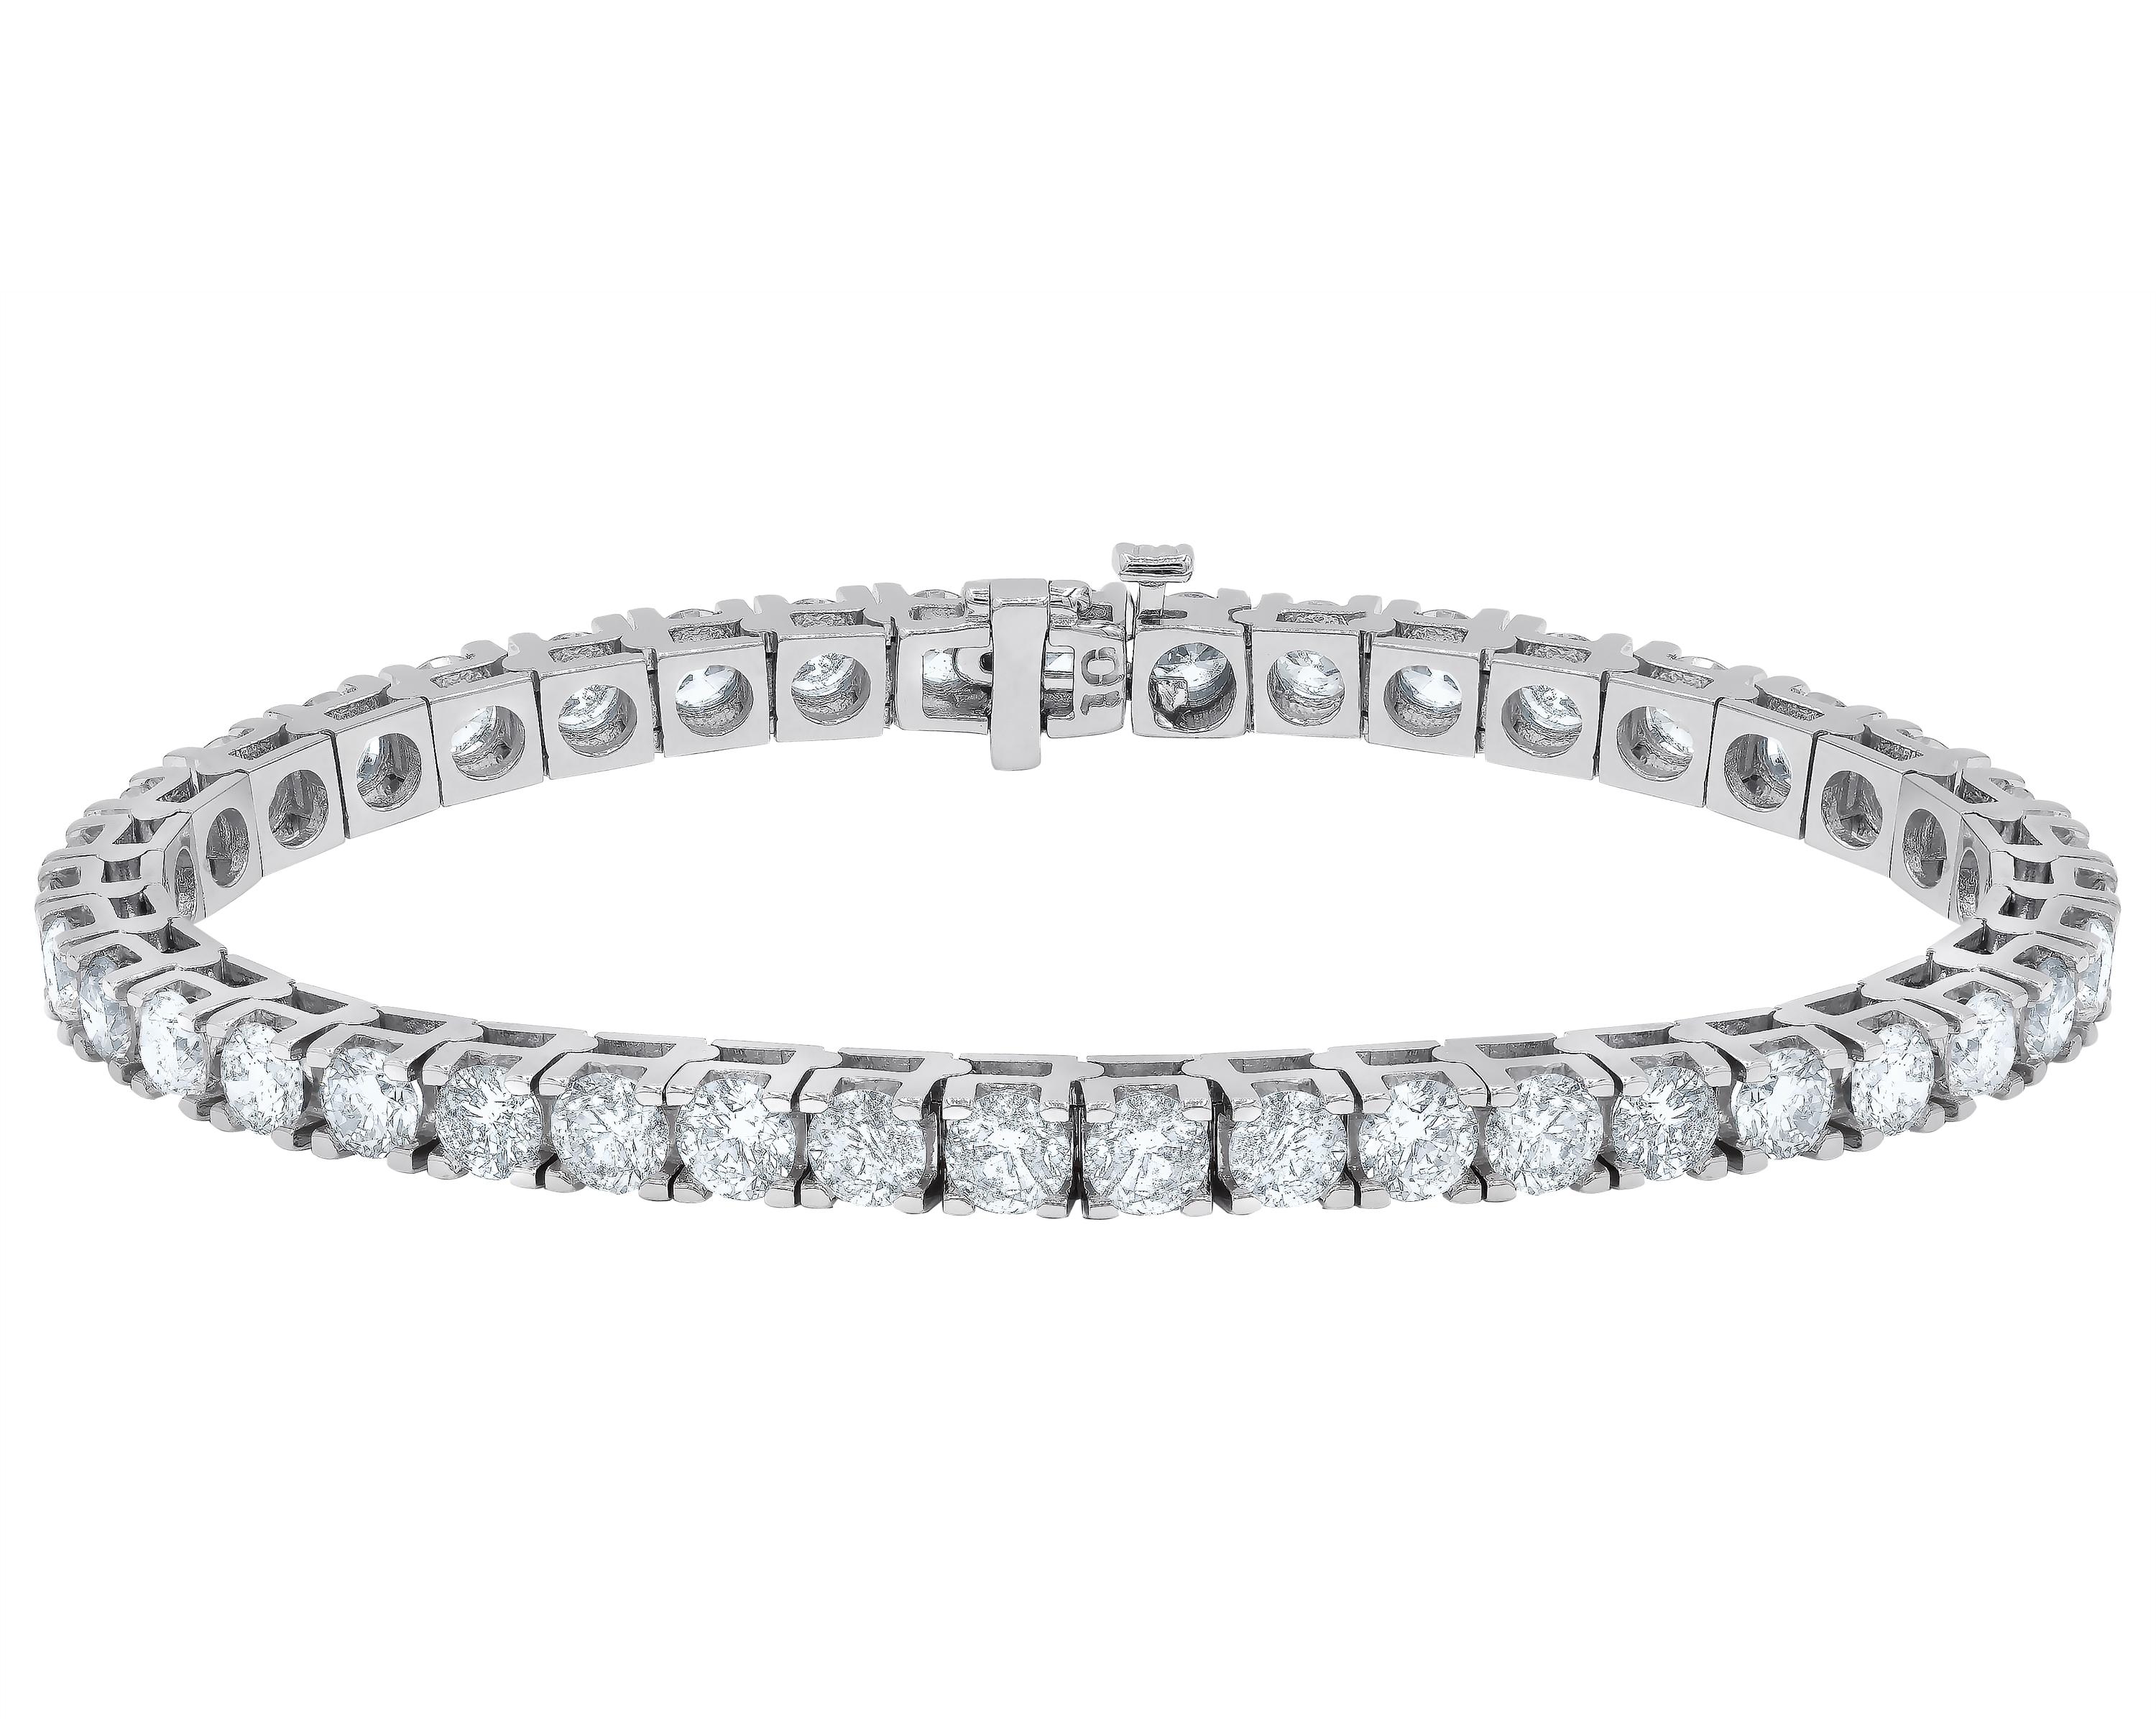 6 carat diamond bracelet